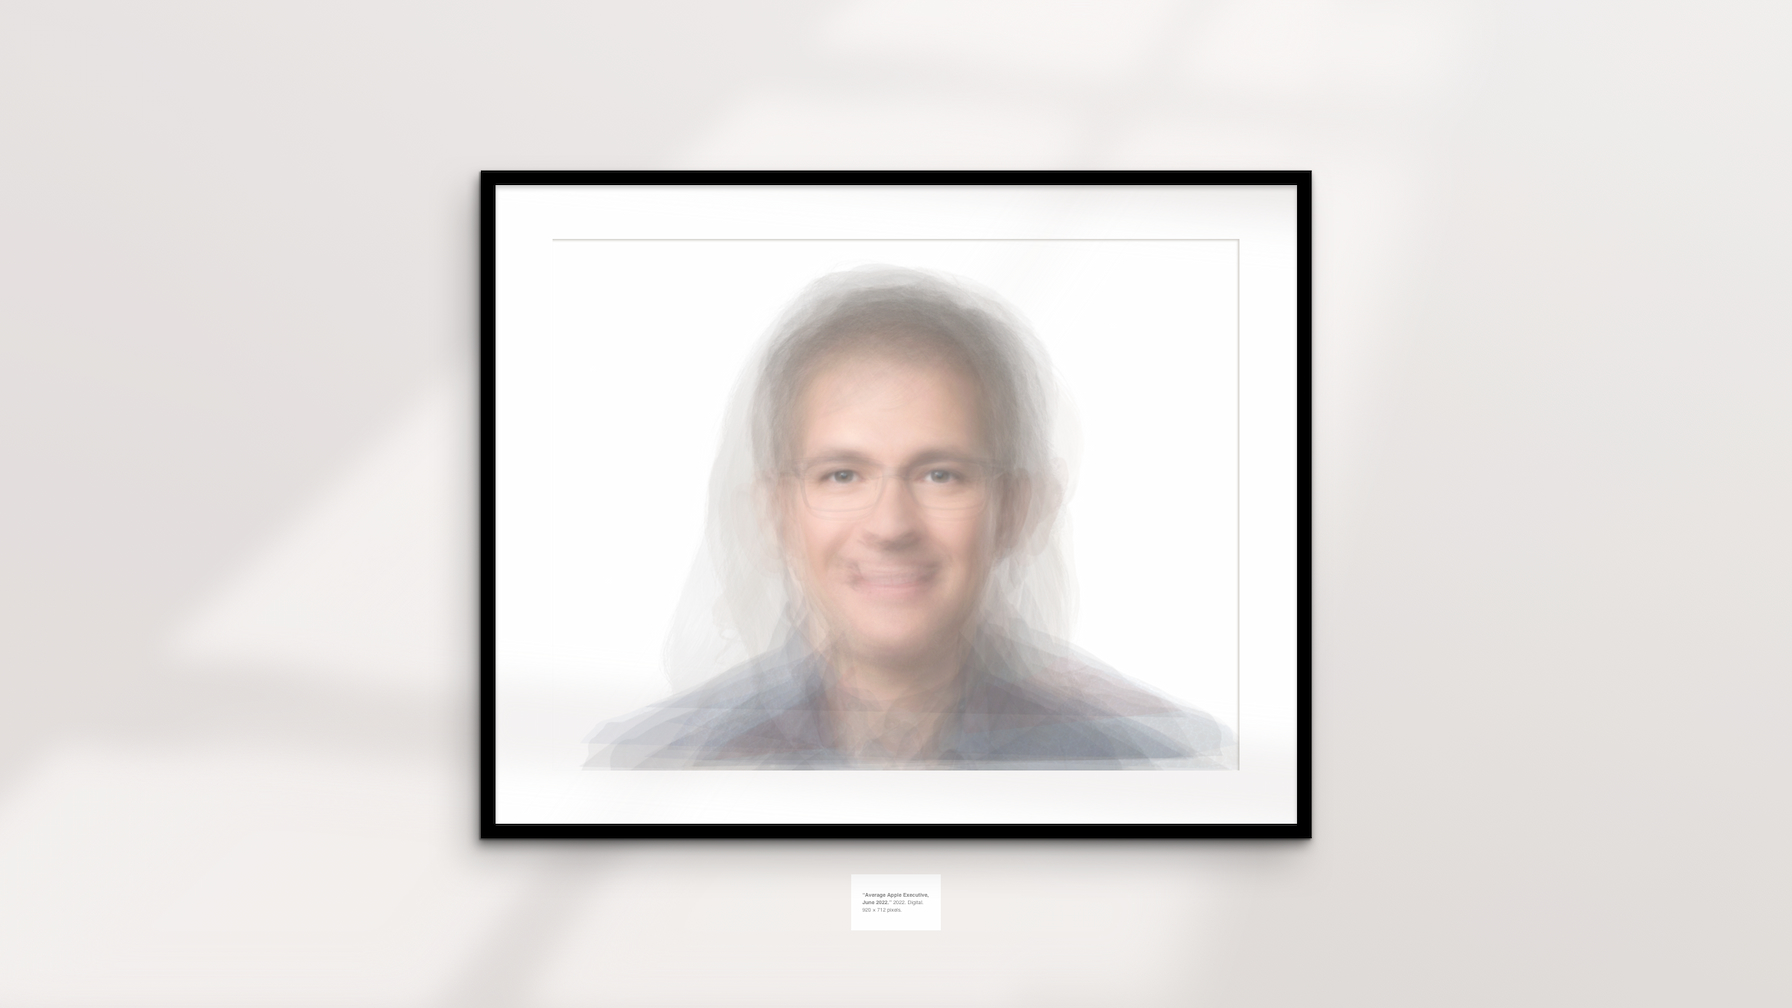 Composite illustration of Apple Leadership headshots as of June 6, 2022.